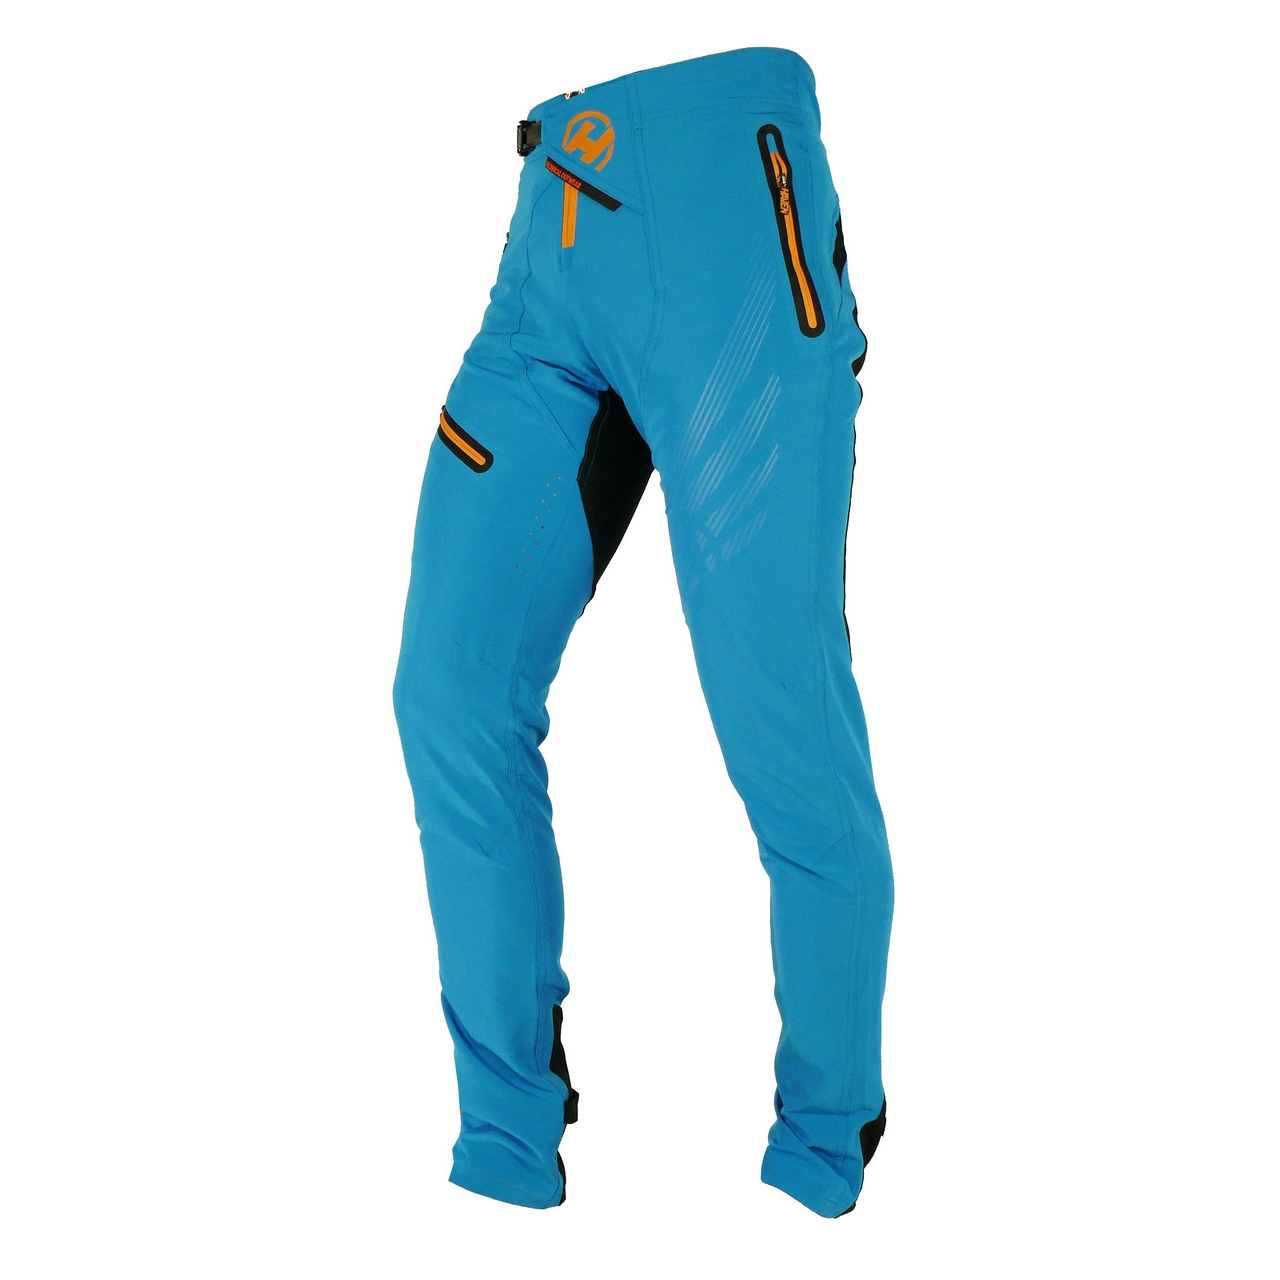 Kalhoty unisex Haven Energizer - modré-oranžové, XL